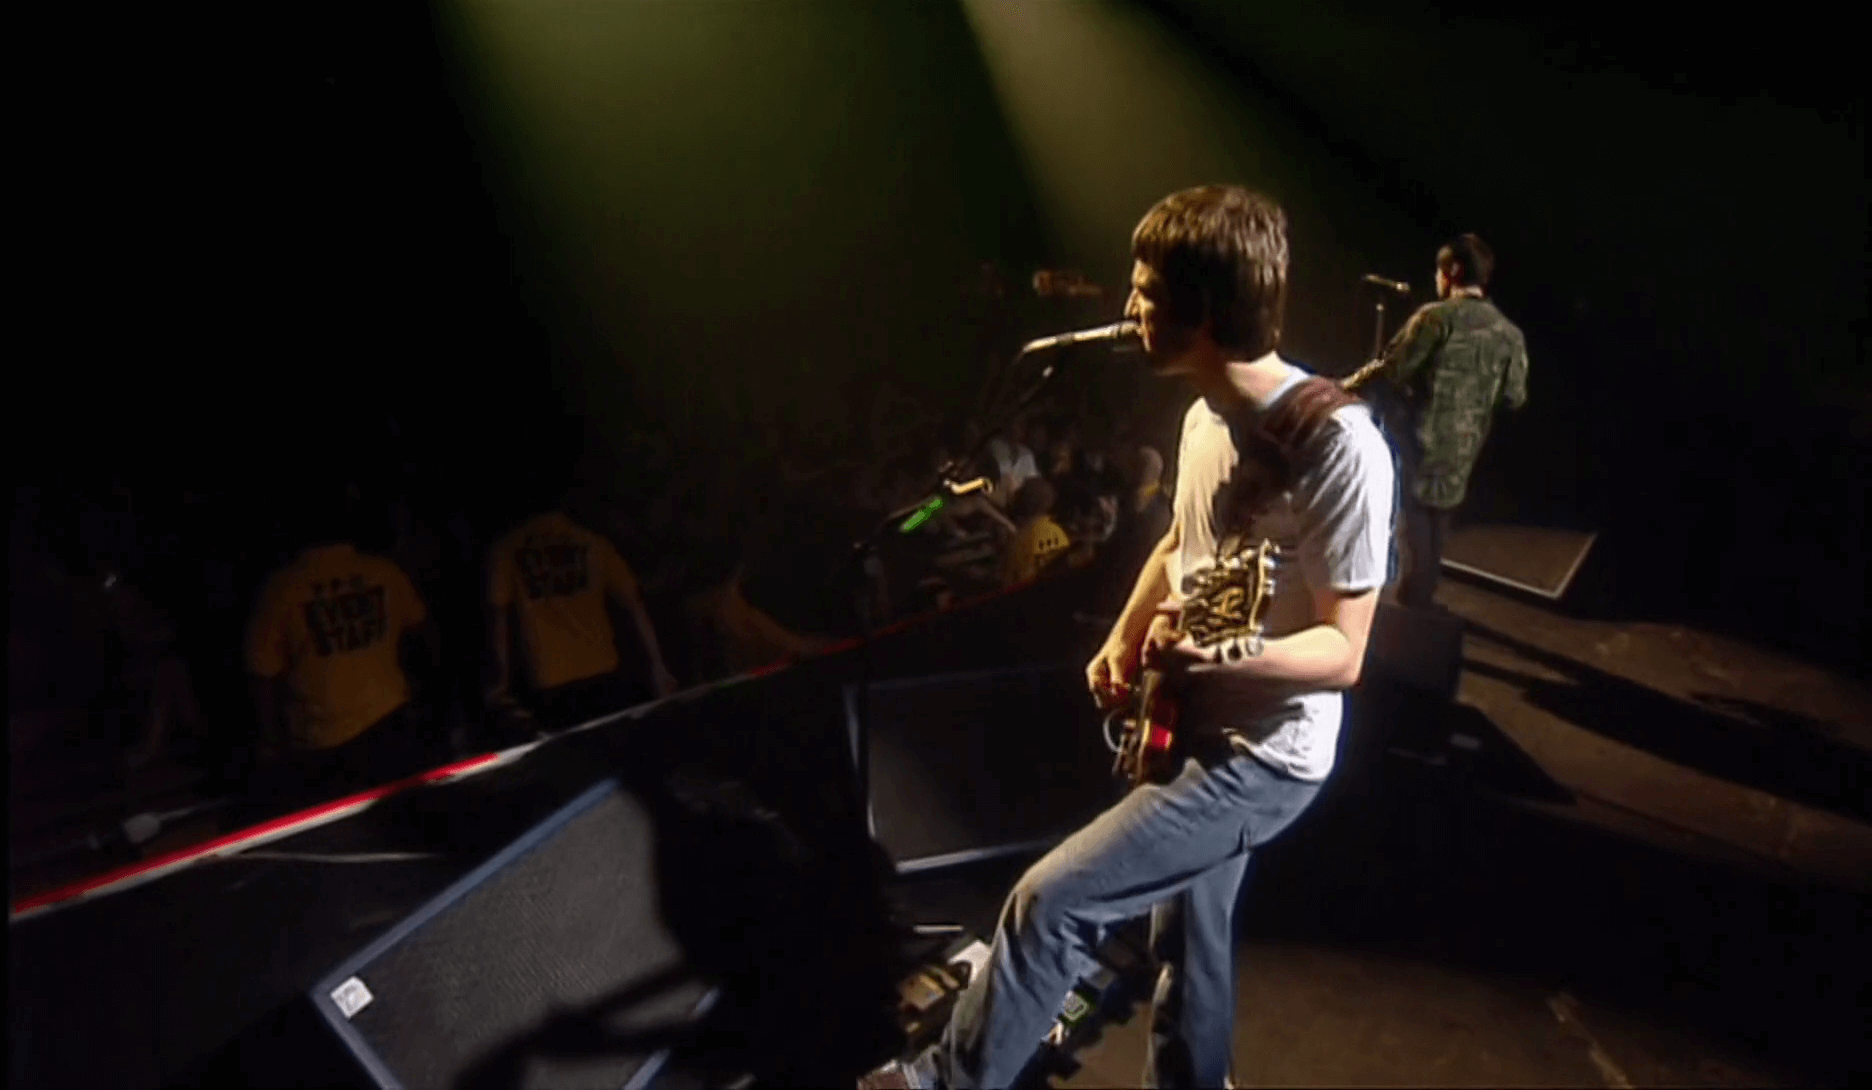 Oasis at Barrowlands; Glasgow, Scotland - October 13, 2001